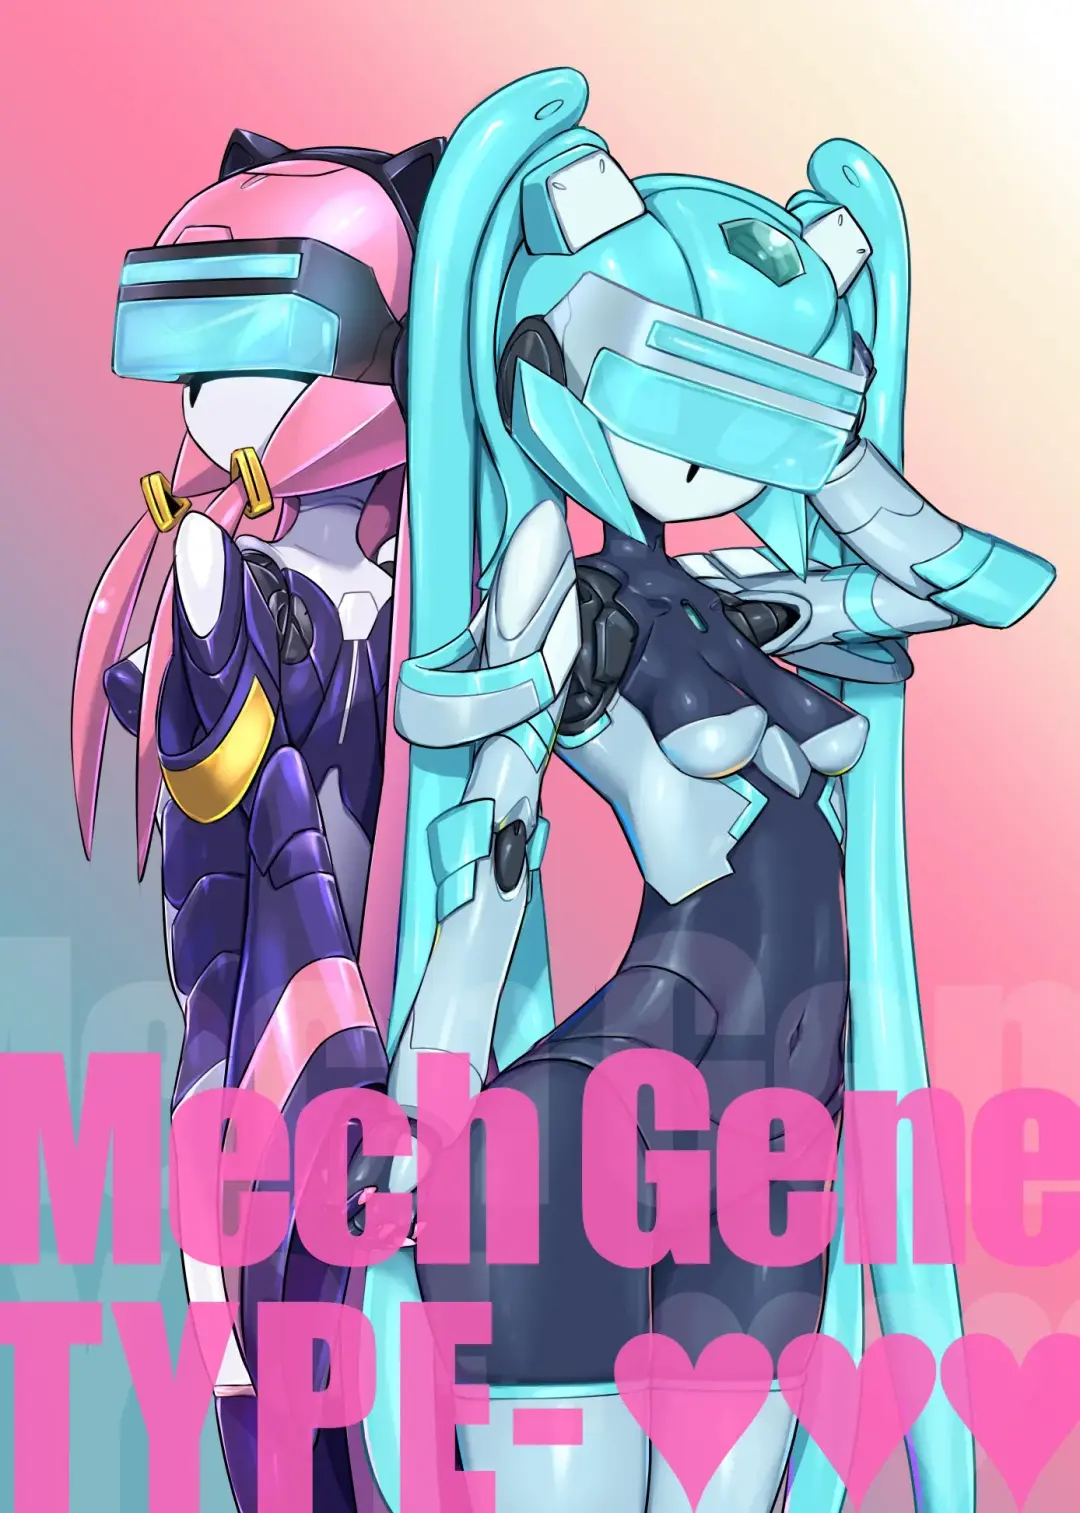 Read [Pochincoff] Mech Gene Type - Fhentai.net